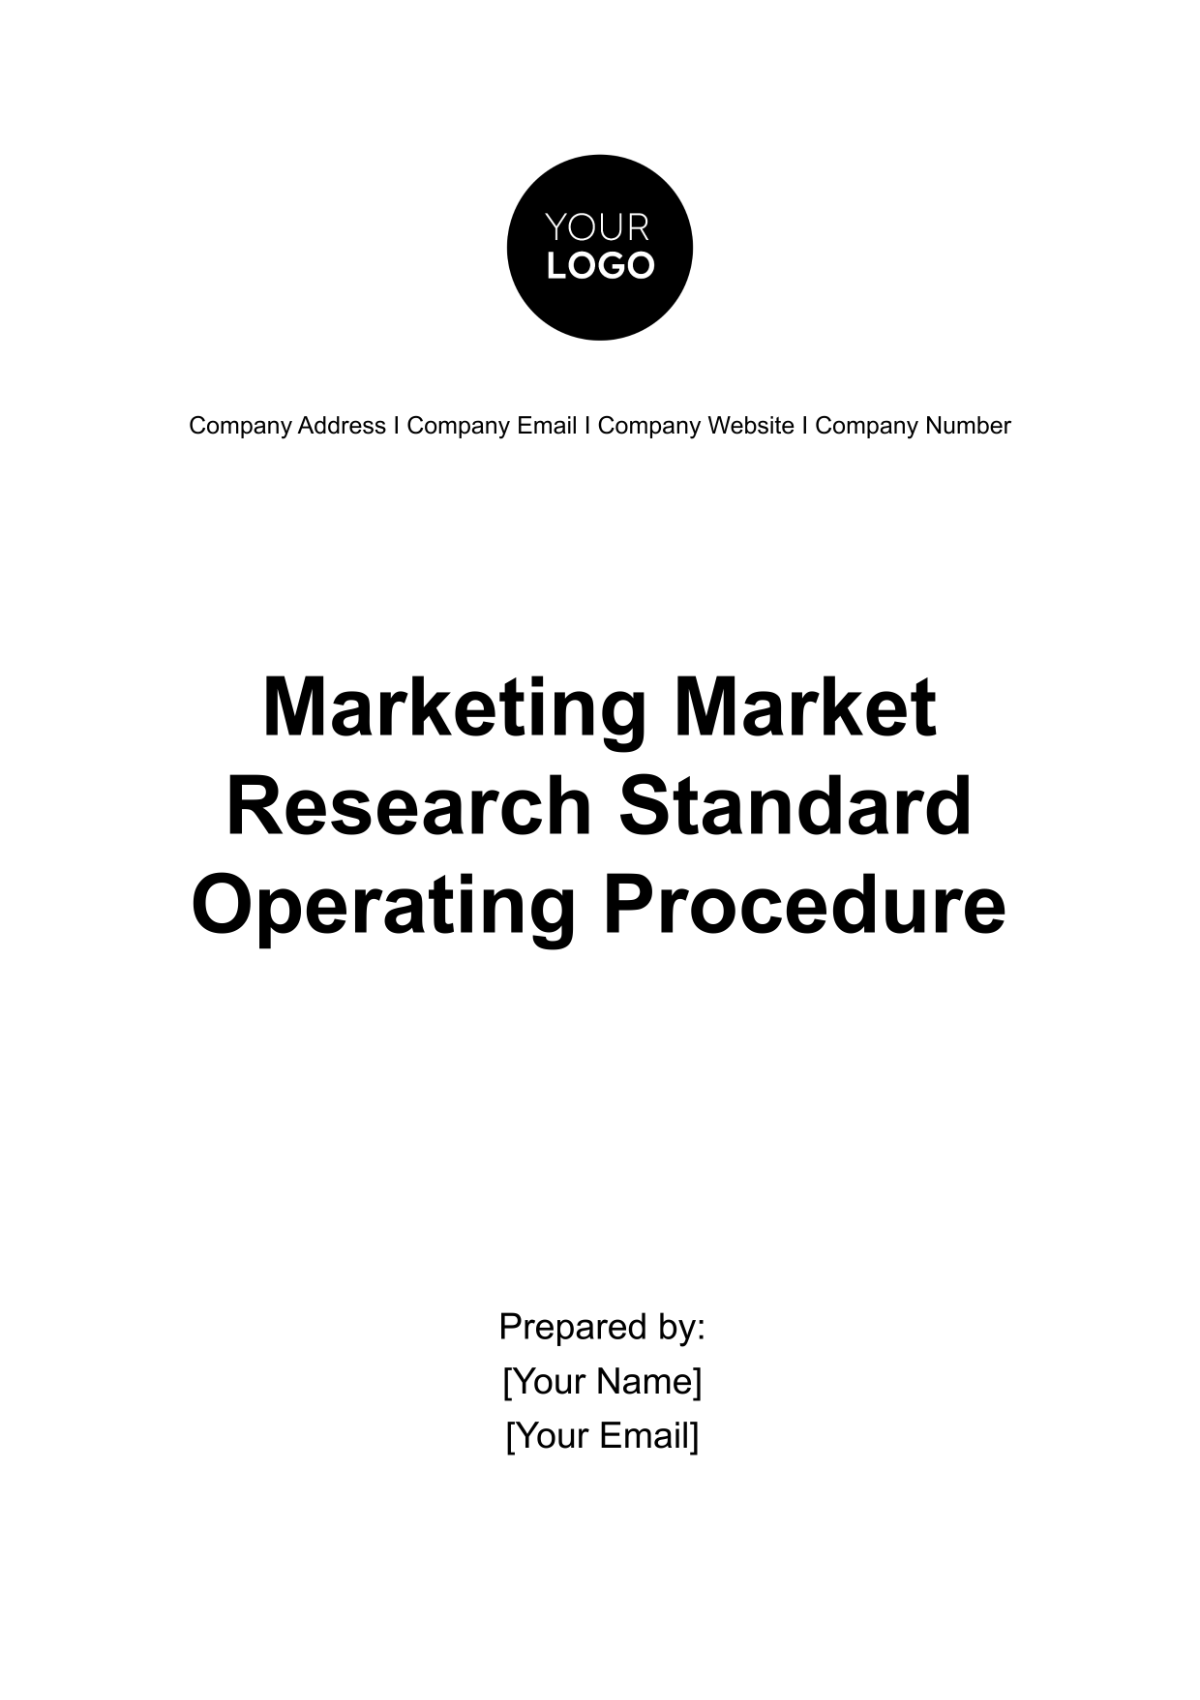 Marketing Market Research Standard Operating Procedure Template